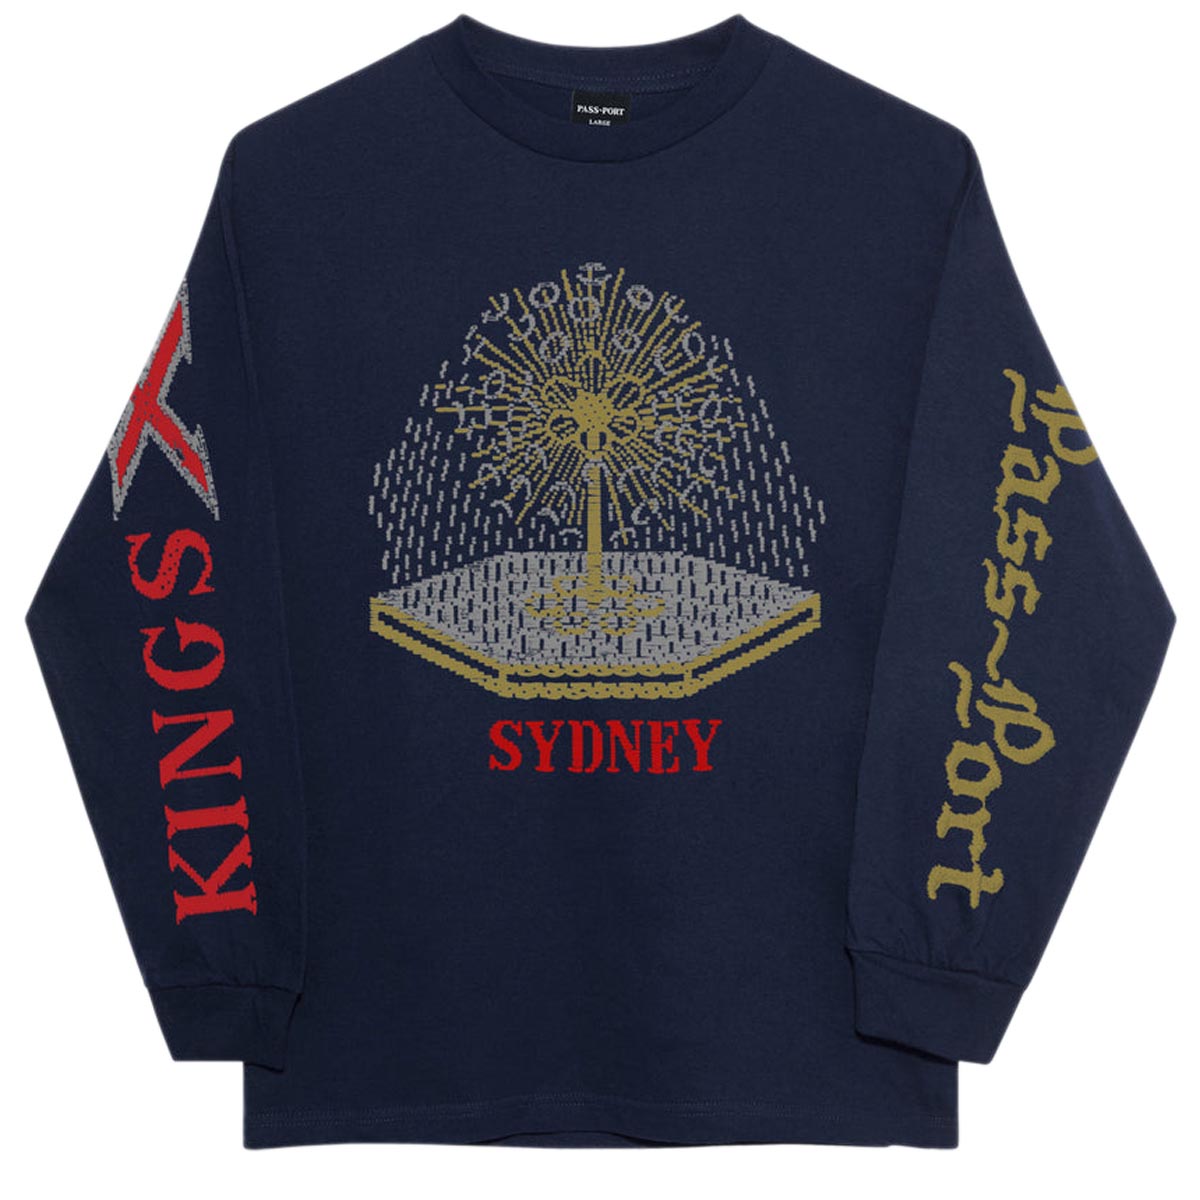 Passport Kings X Long Sleeve T-Shirt - Navy image 1